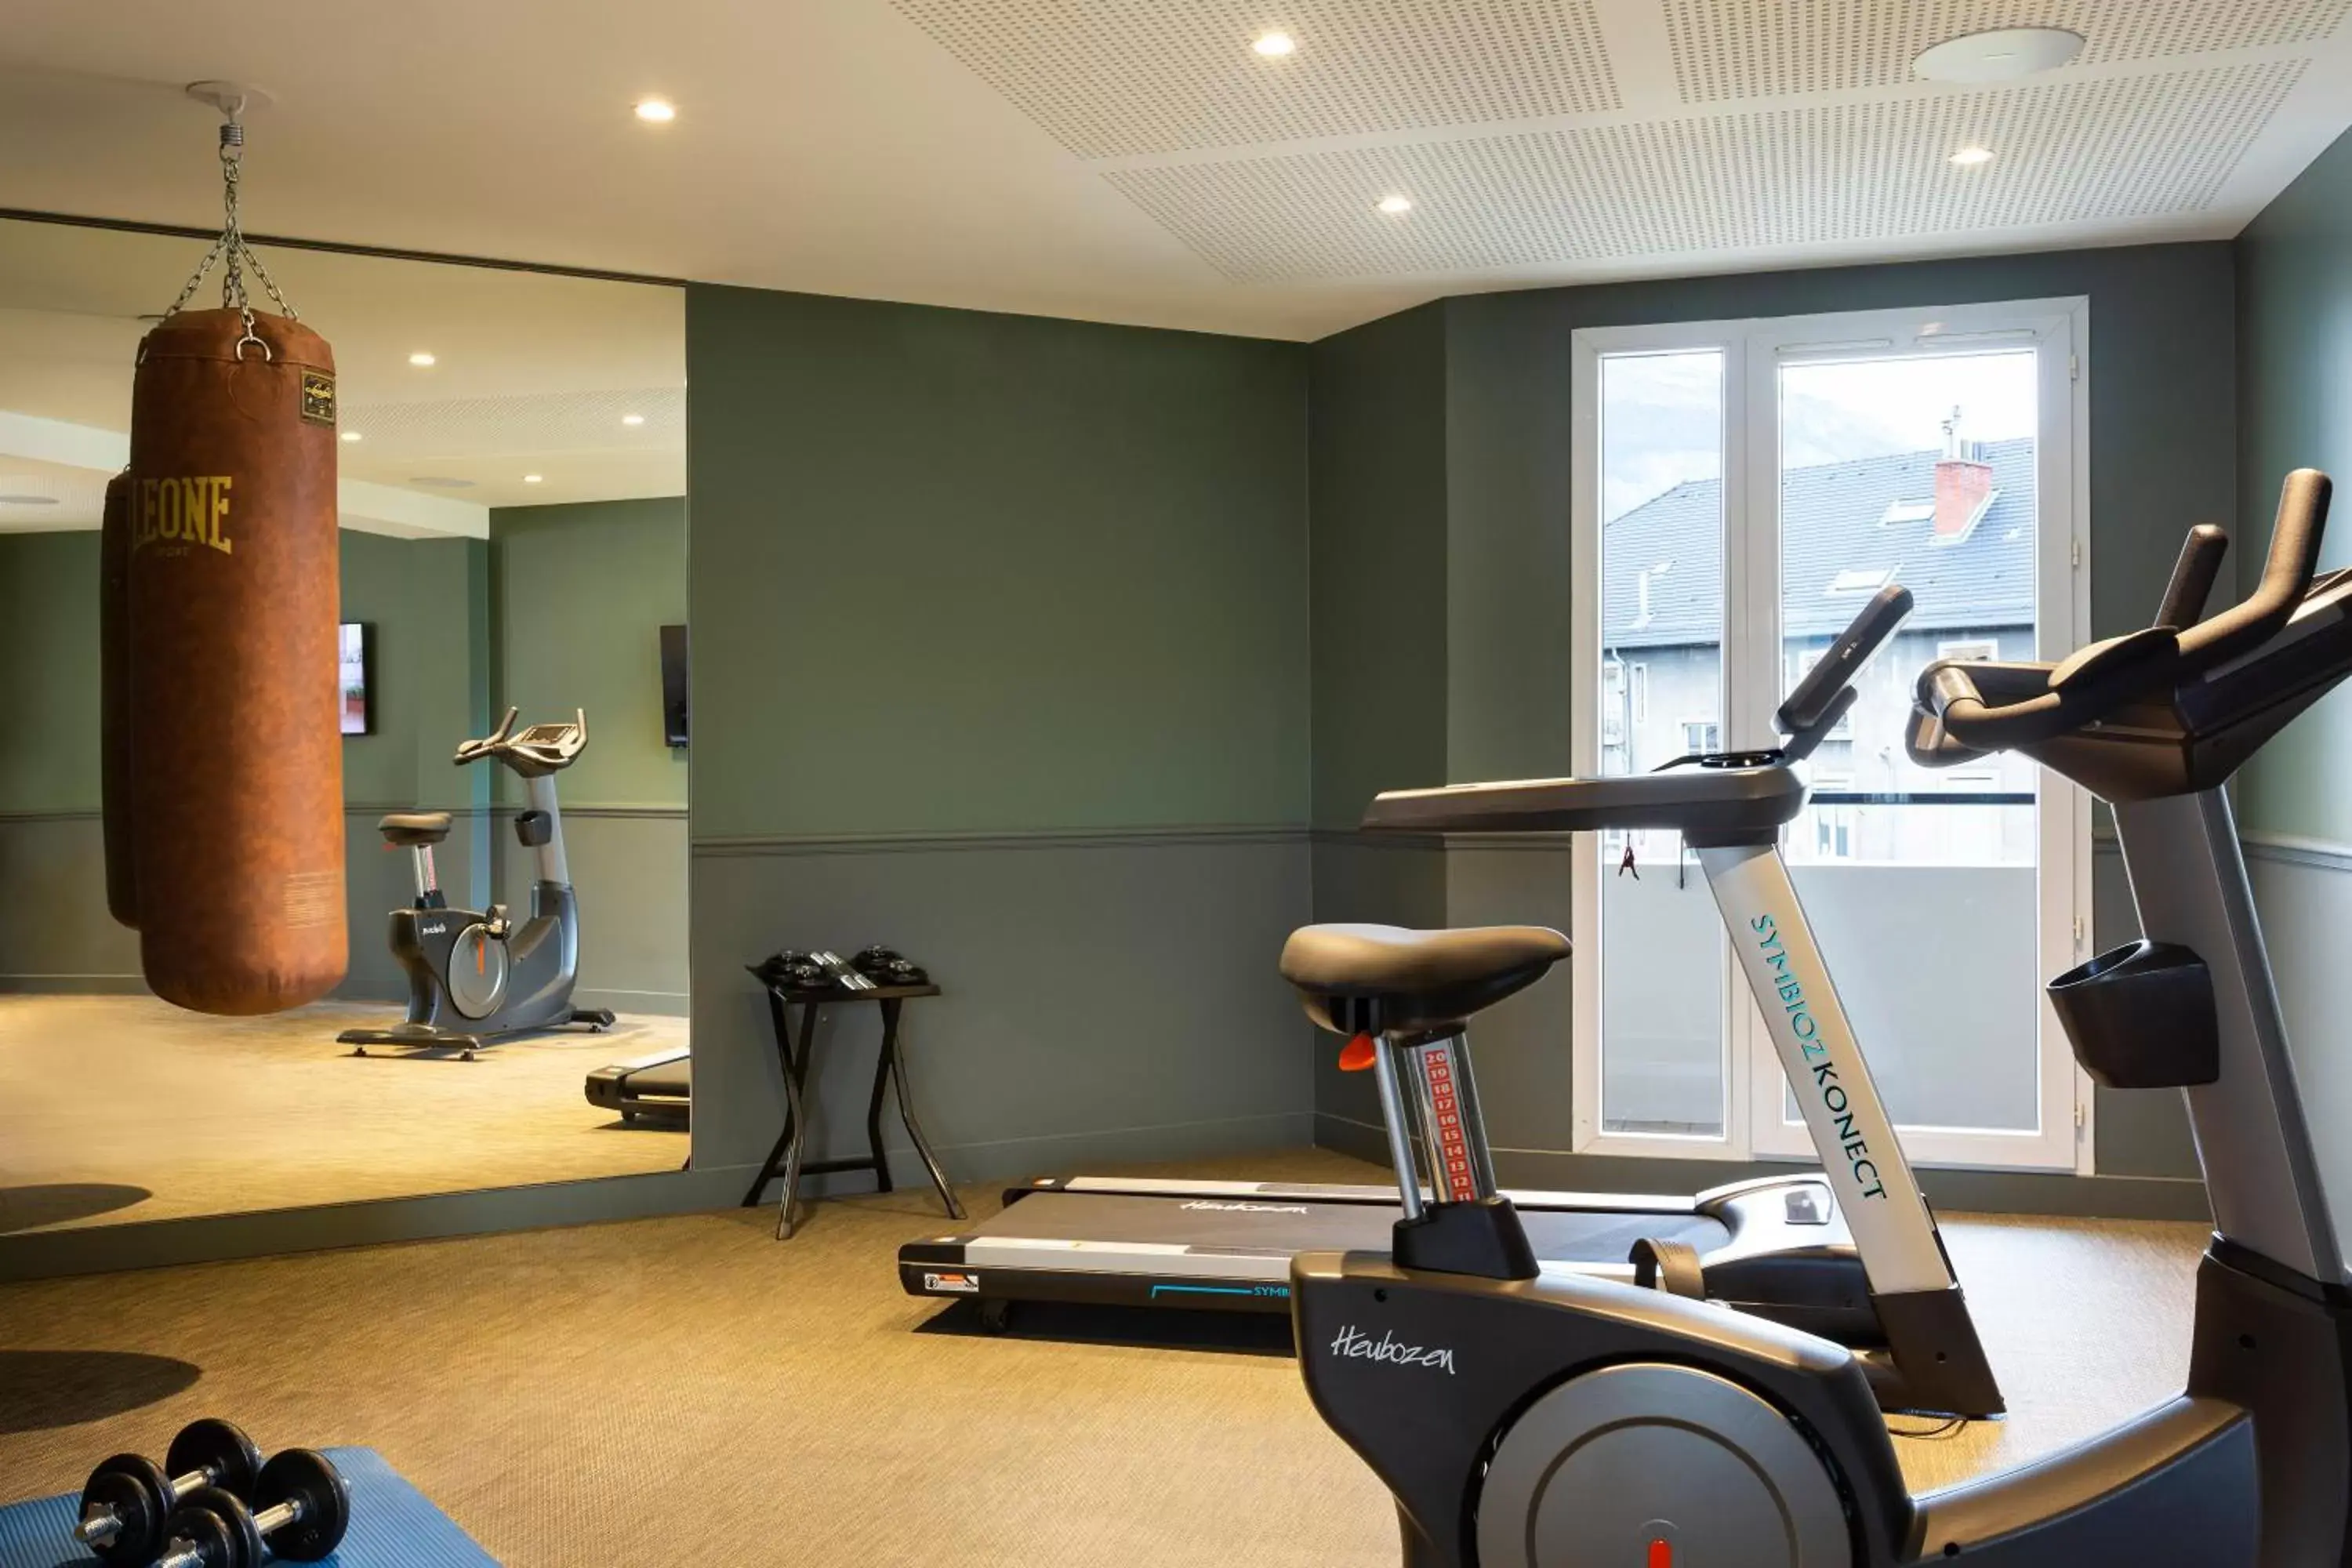 Fitness centre/facilities, Fitness Center/Facilities in RockyPop Grenoble Hotel